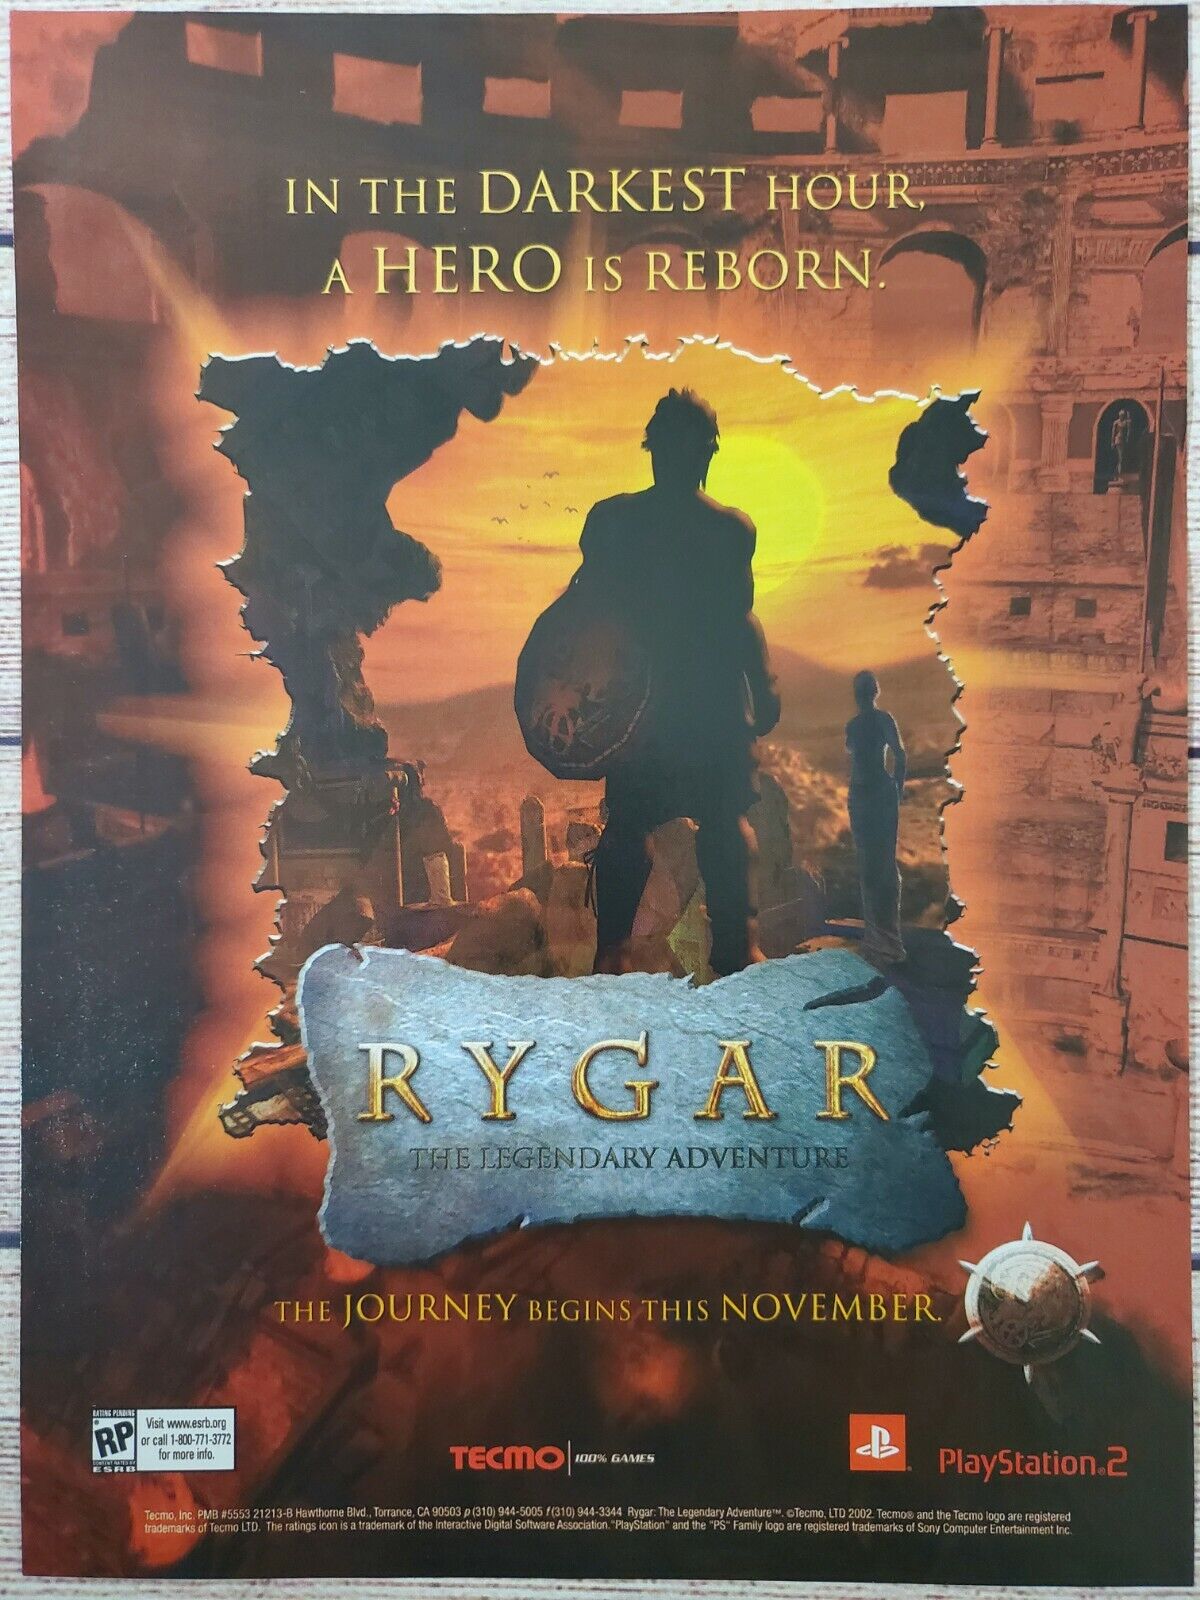 Rygar The Legendary Adventure Playstation 2 PS2 2002 Promo Ad Art Print Poster